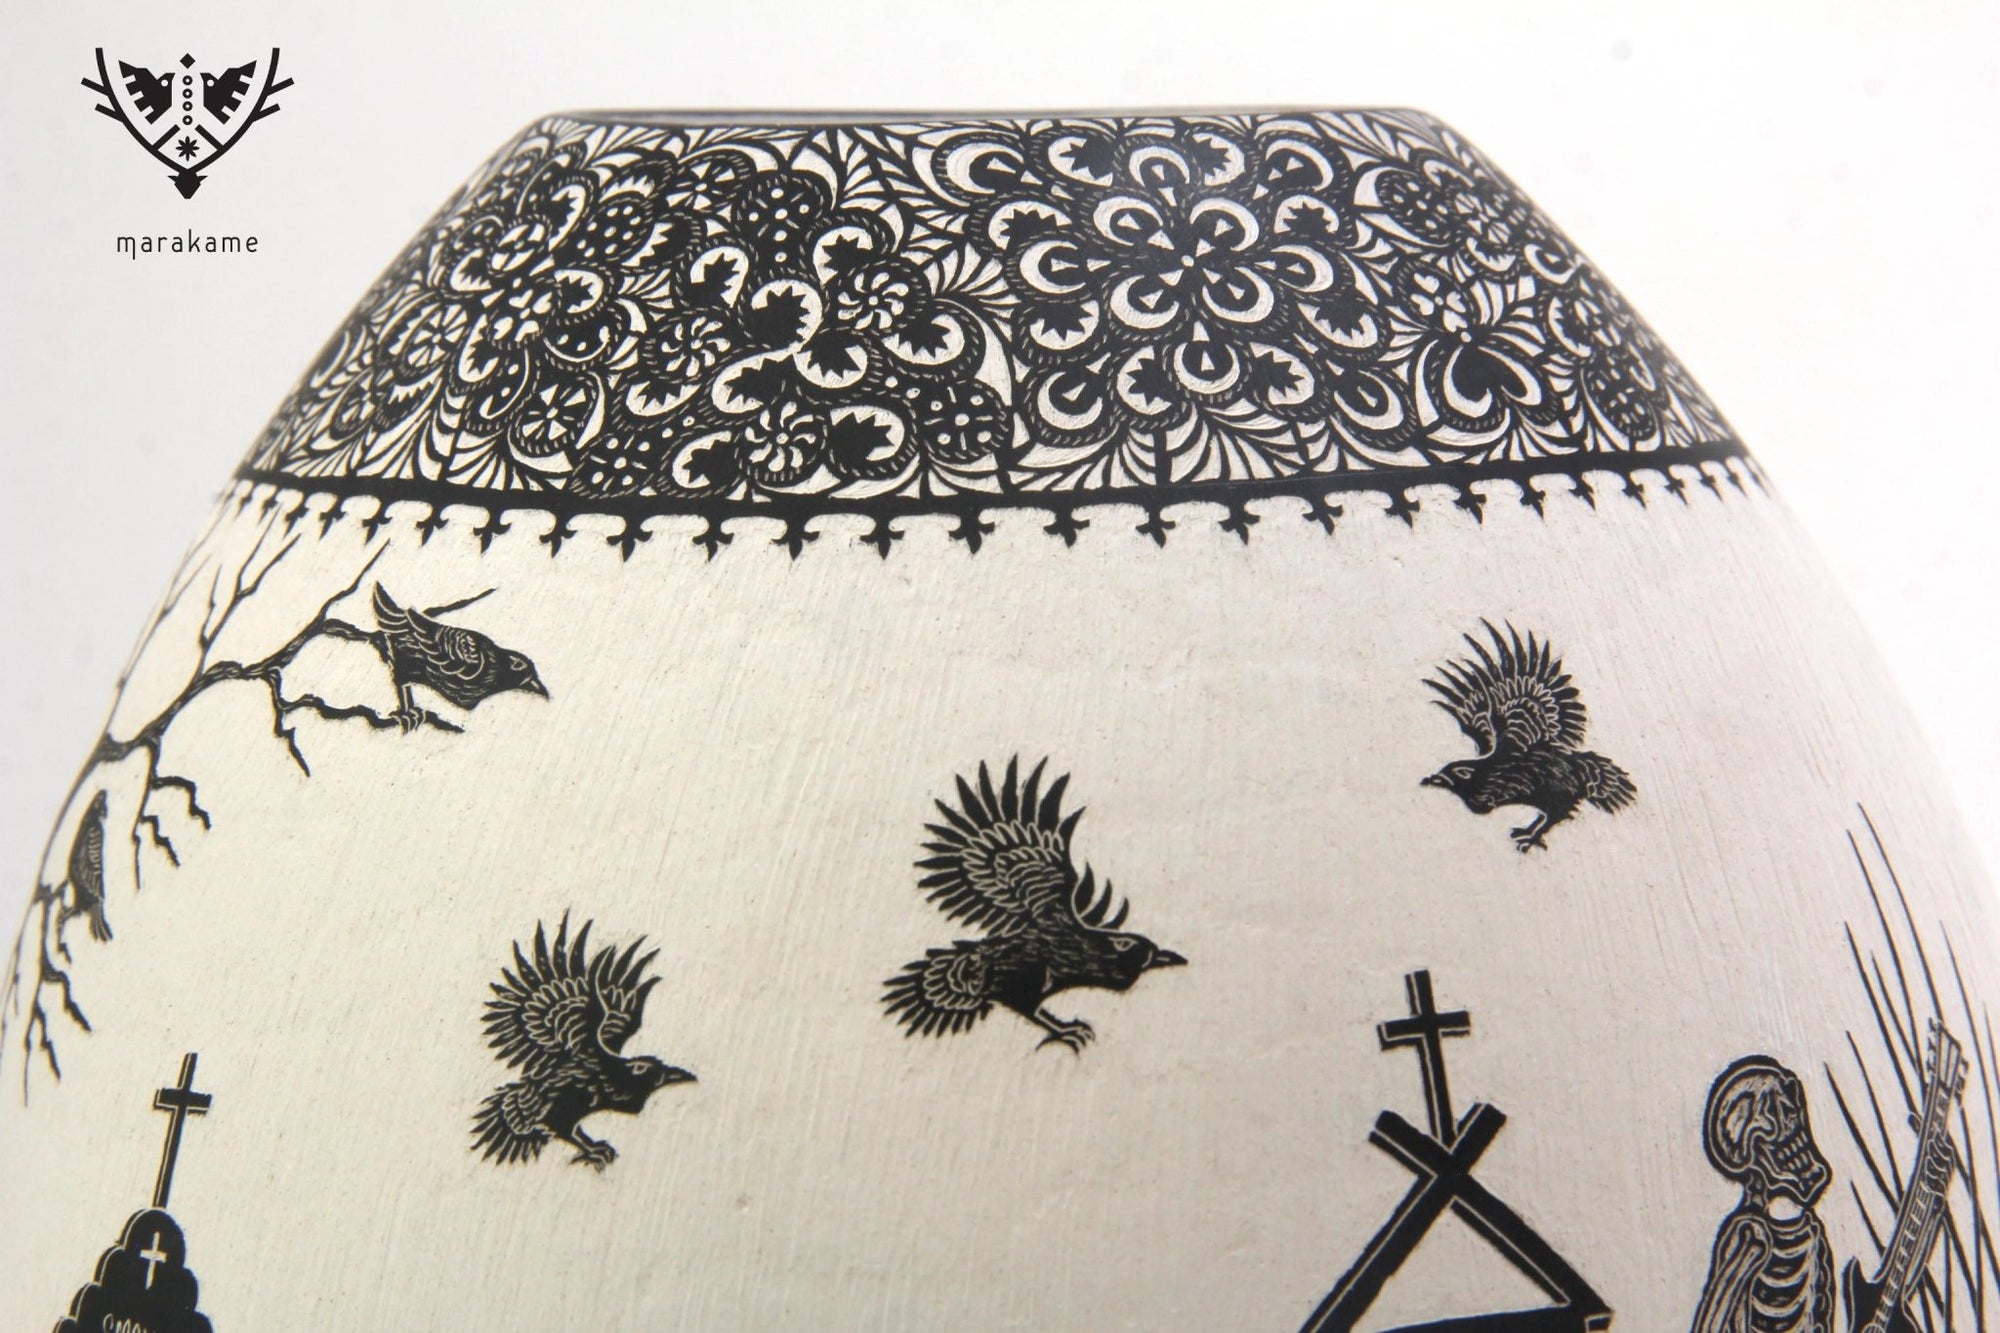 Mata Ortiz Ceramic - Life and Death by day - large piece - Huichol Art - Marakame